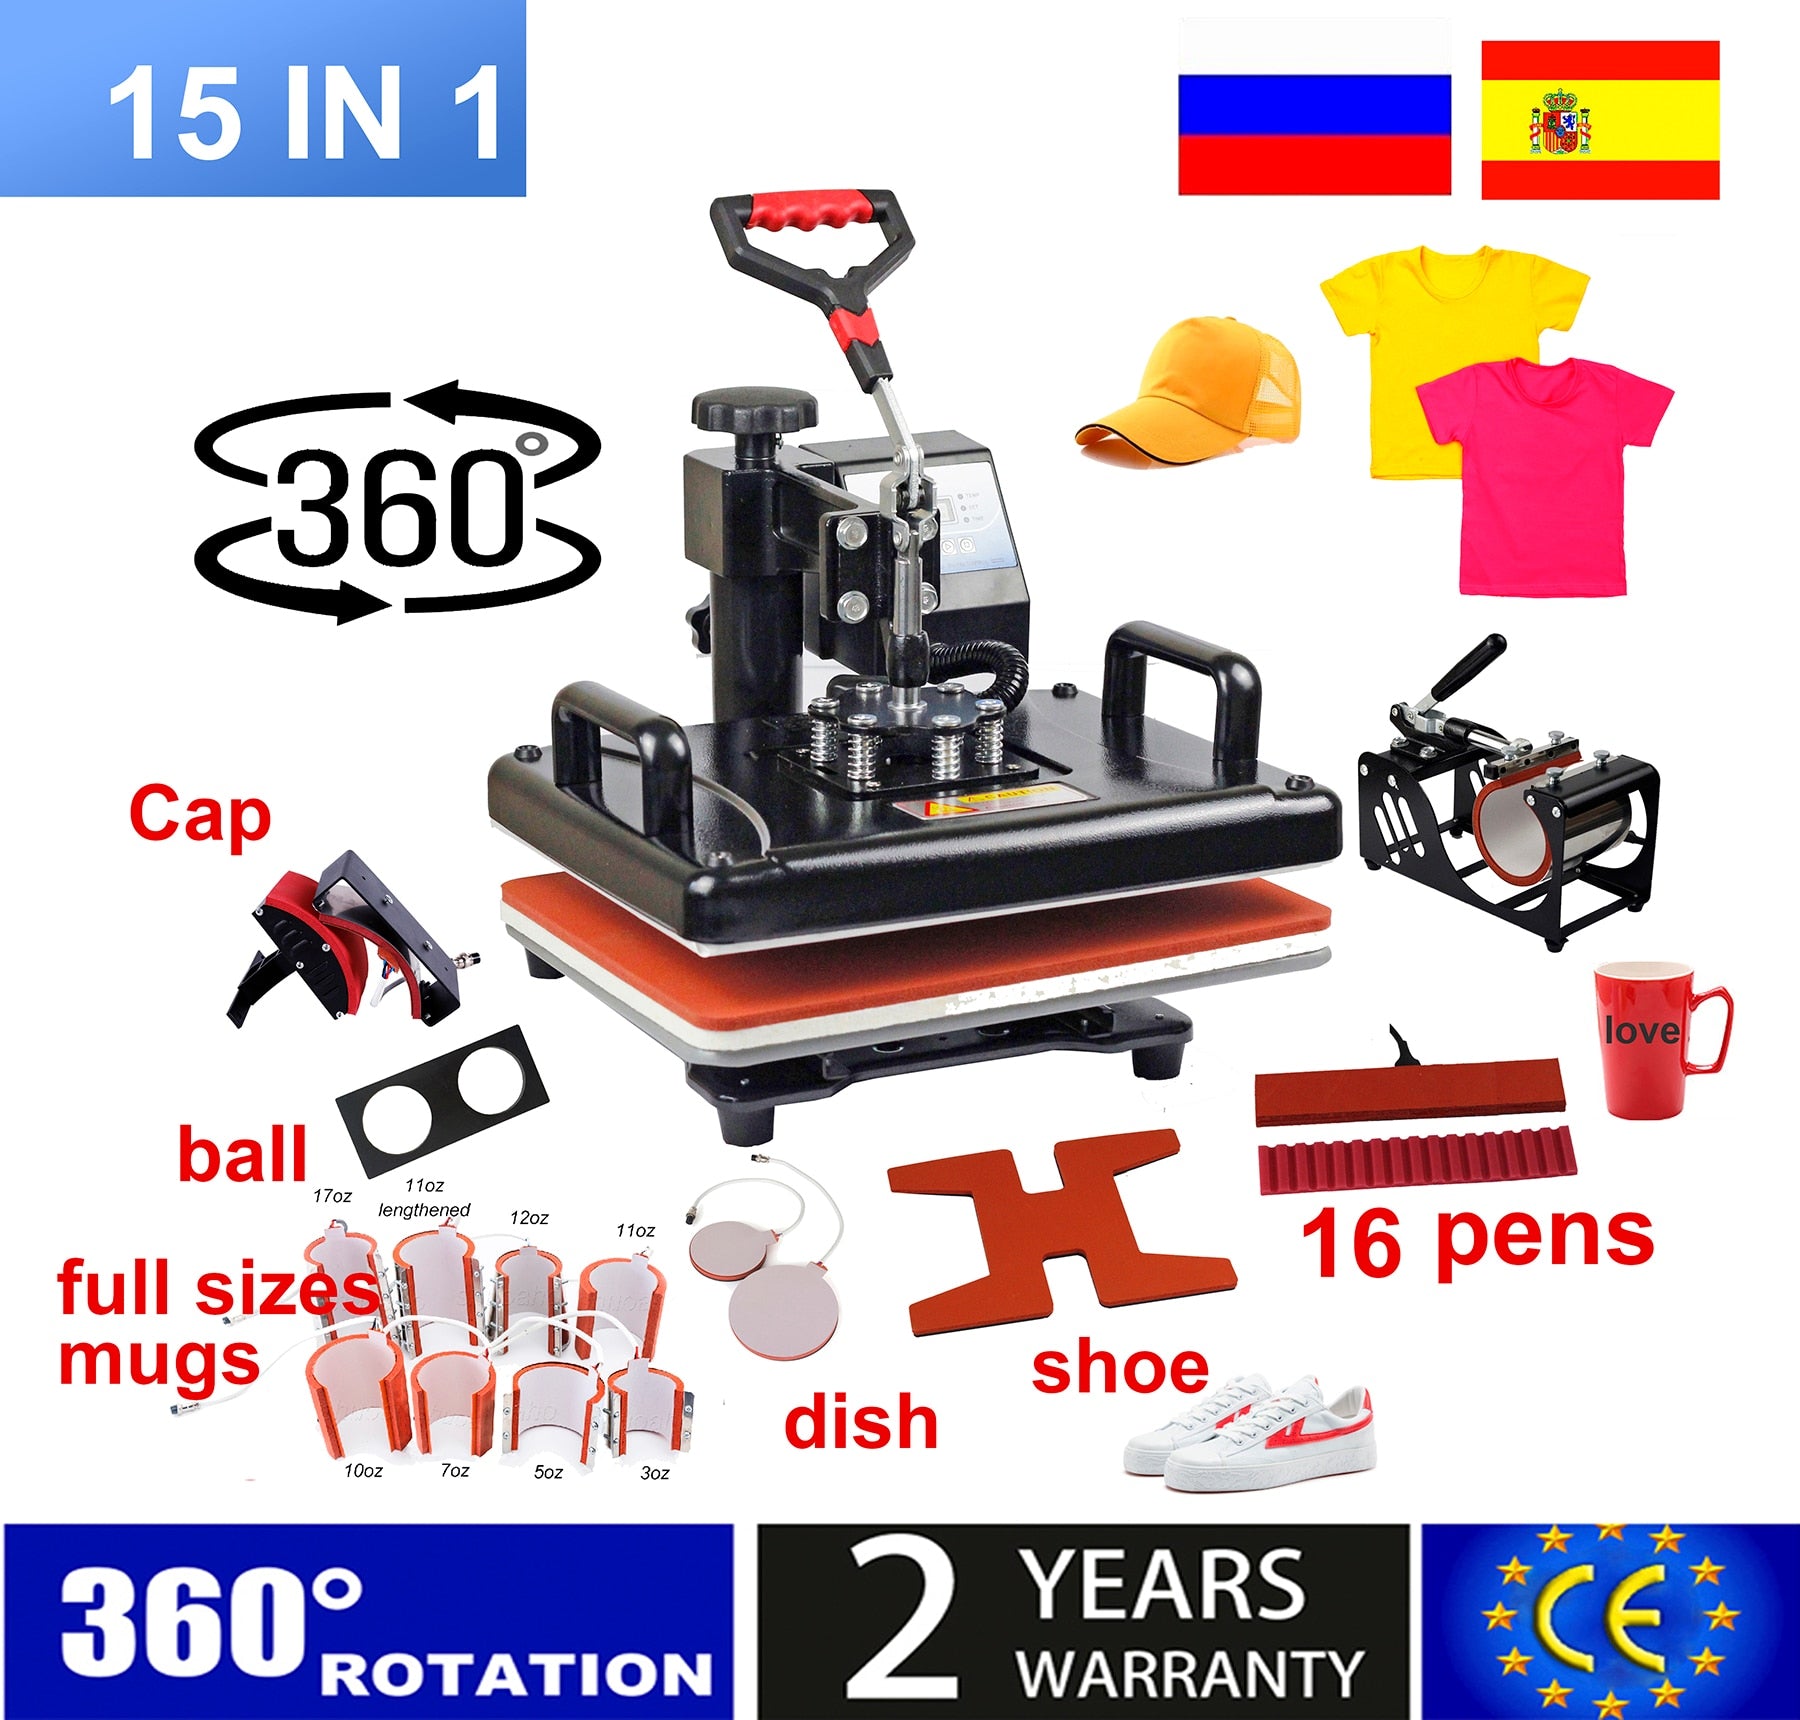 craftercuts 15 In 1 Combo Muntifunctional Sublimation Heat Press Machine T shirt Heat Transfer Printer For Mug/Cap/football/bottle/pen/shoes